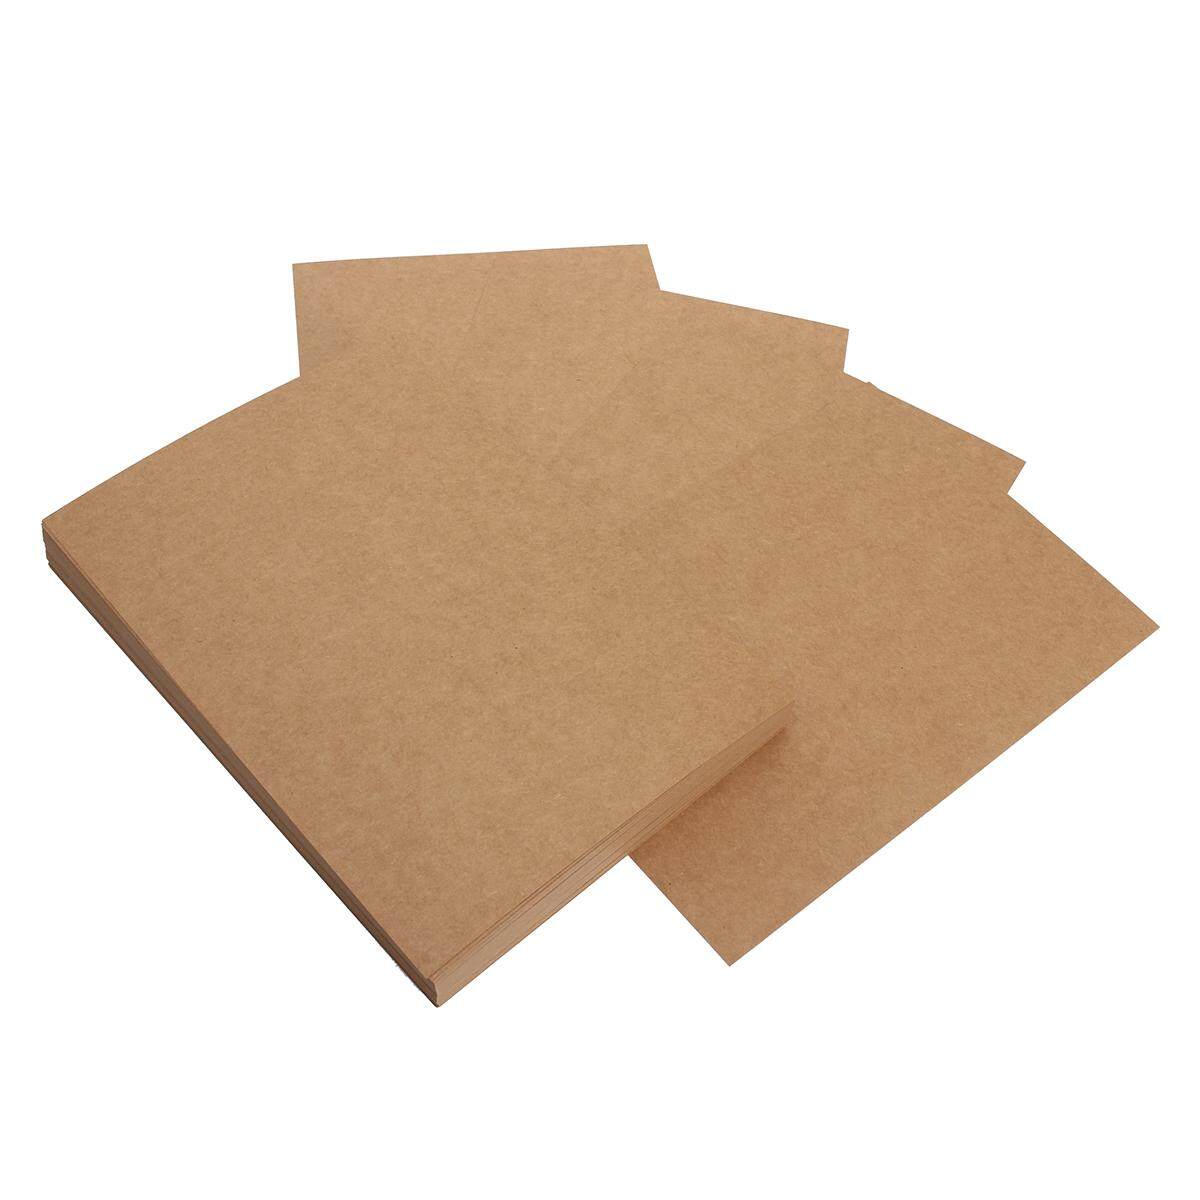 2 x DIY Papel Saco Paperbag rectangular de papel kraft marrón blanco en blanco 